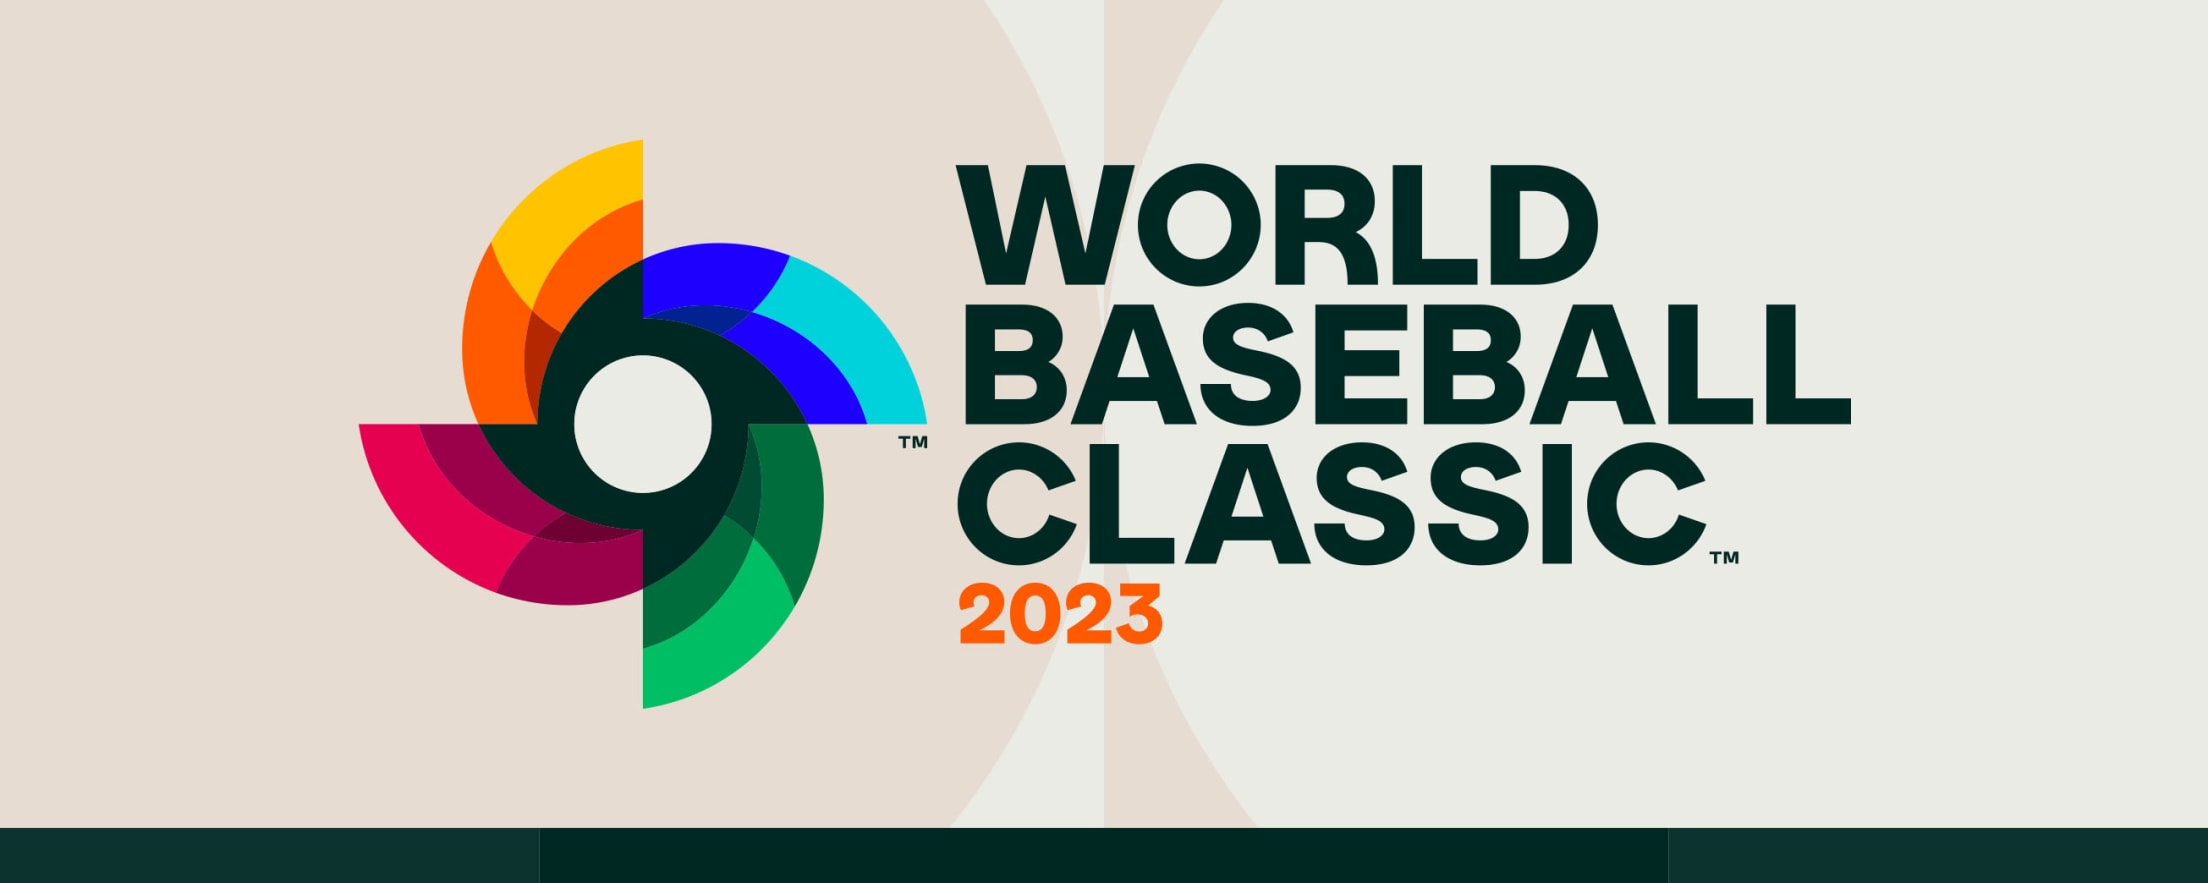 World Baseball Classic 2023 Miami Marlins